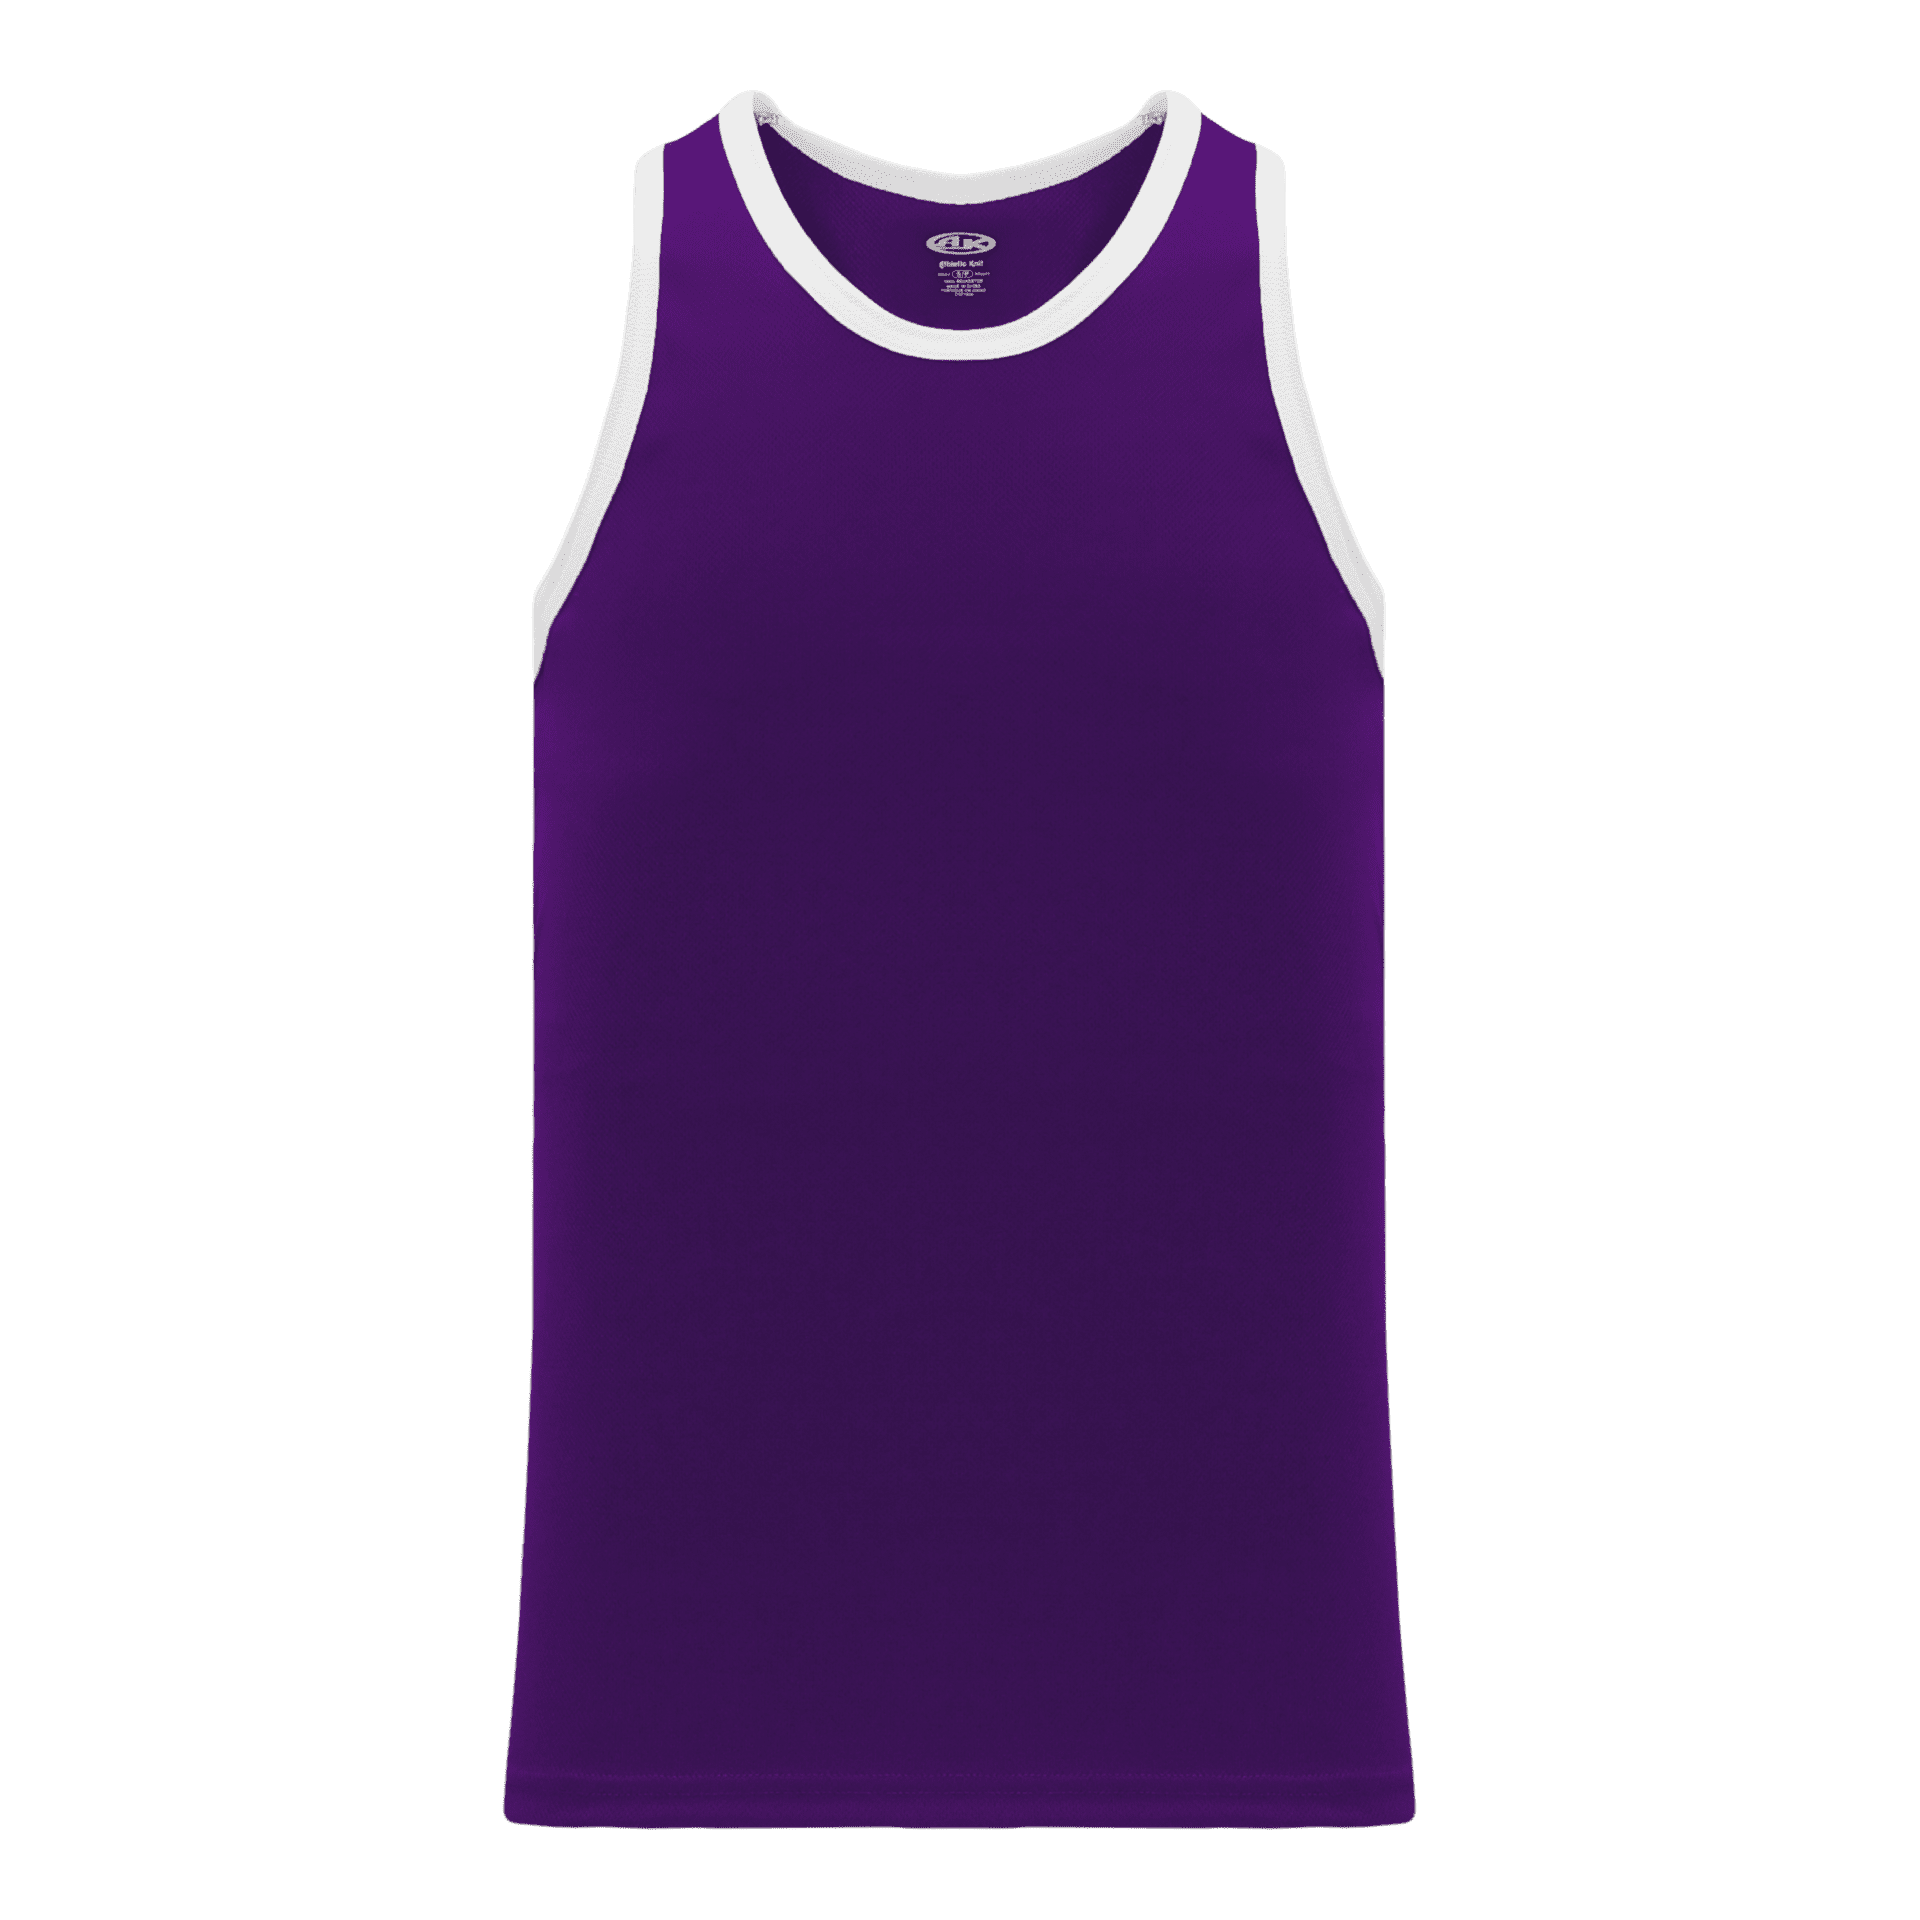 ATHLETIC KNIT LEAGUE BASKETBALL JERSEY #B1325 Purple / White